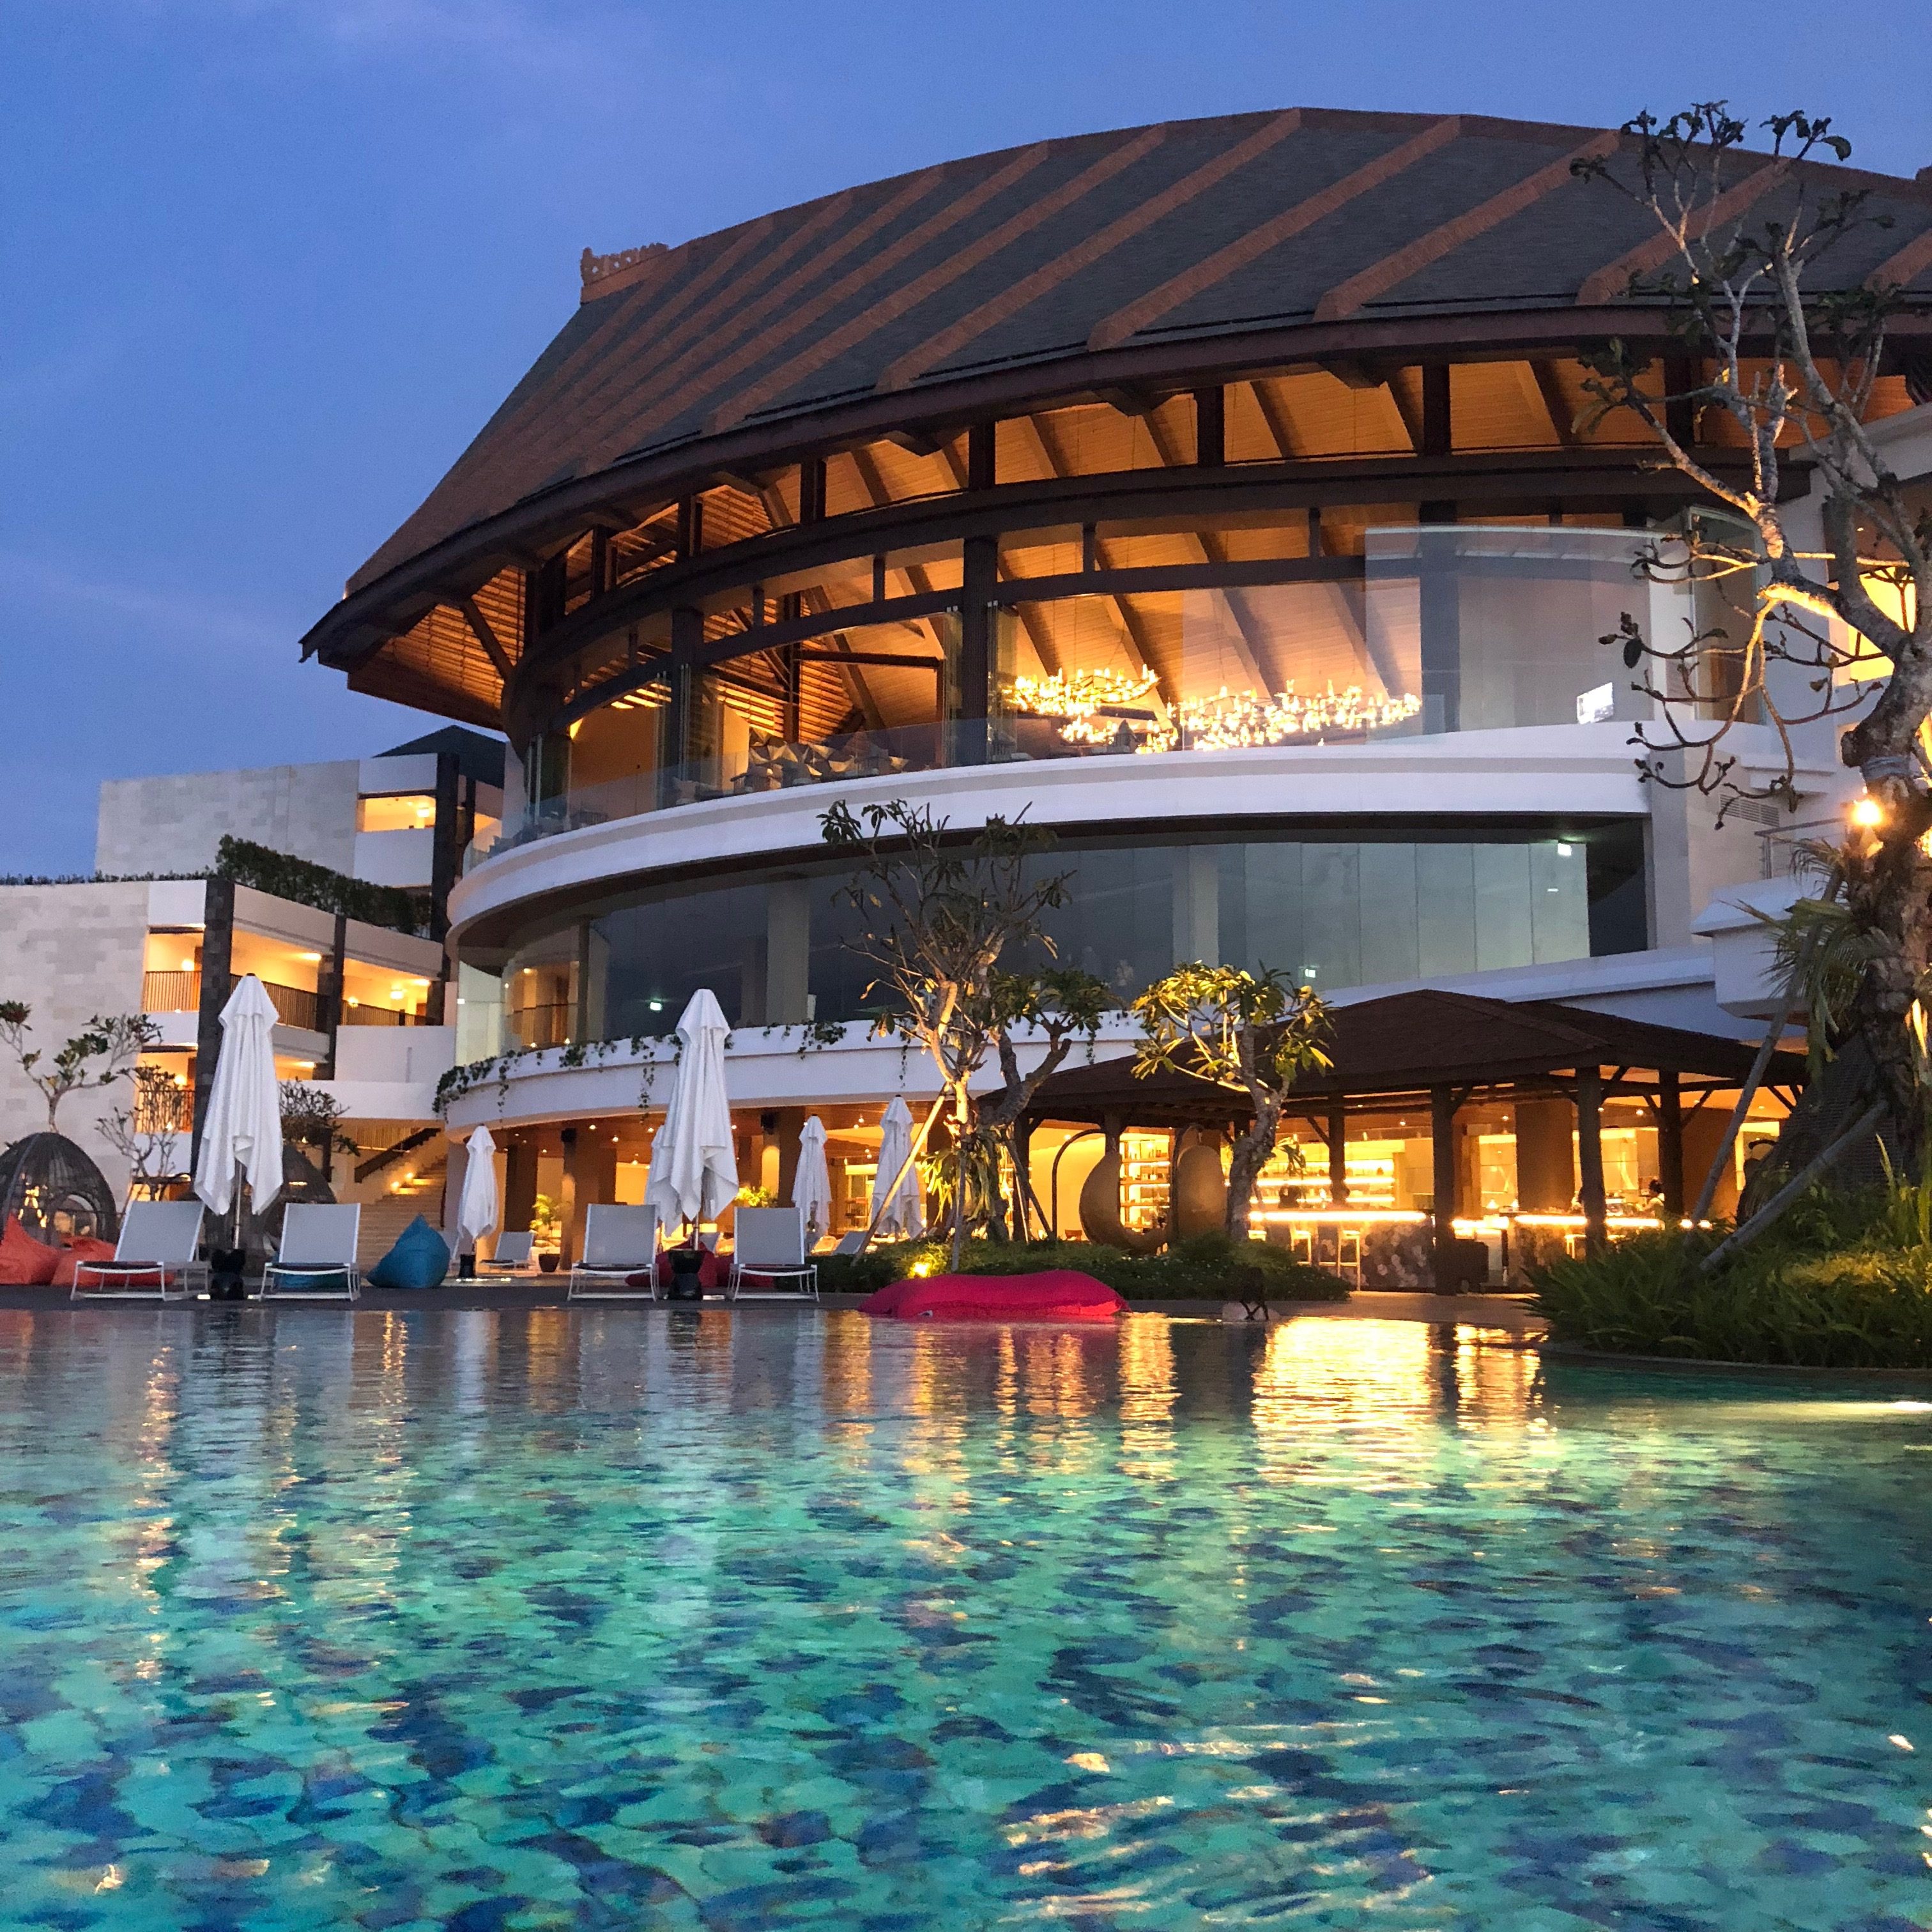 Renaissance Hotel in Uluwatu, Bali – Luxury Trip Review